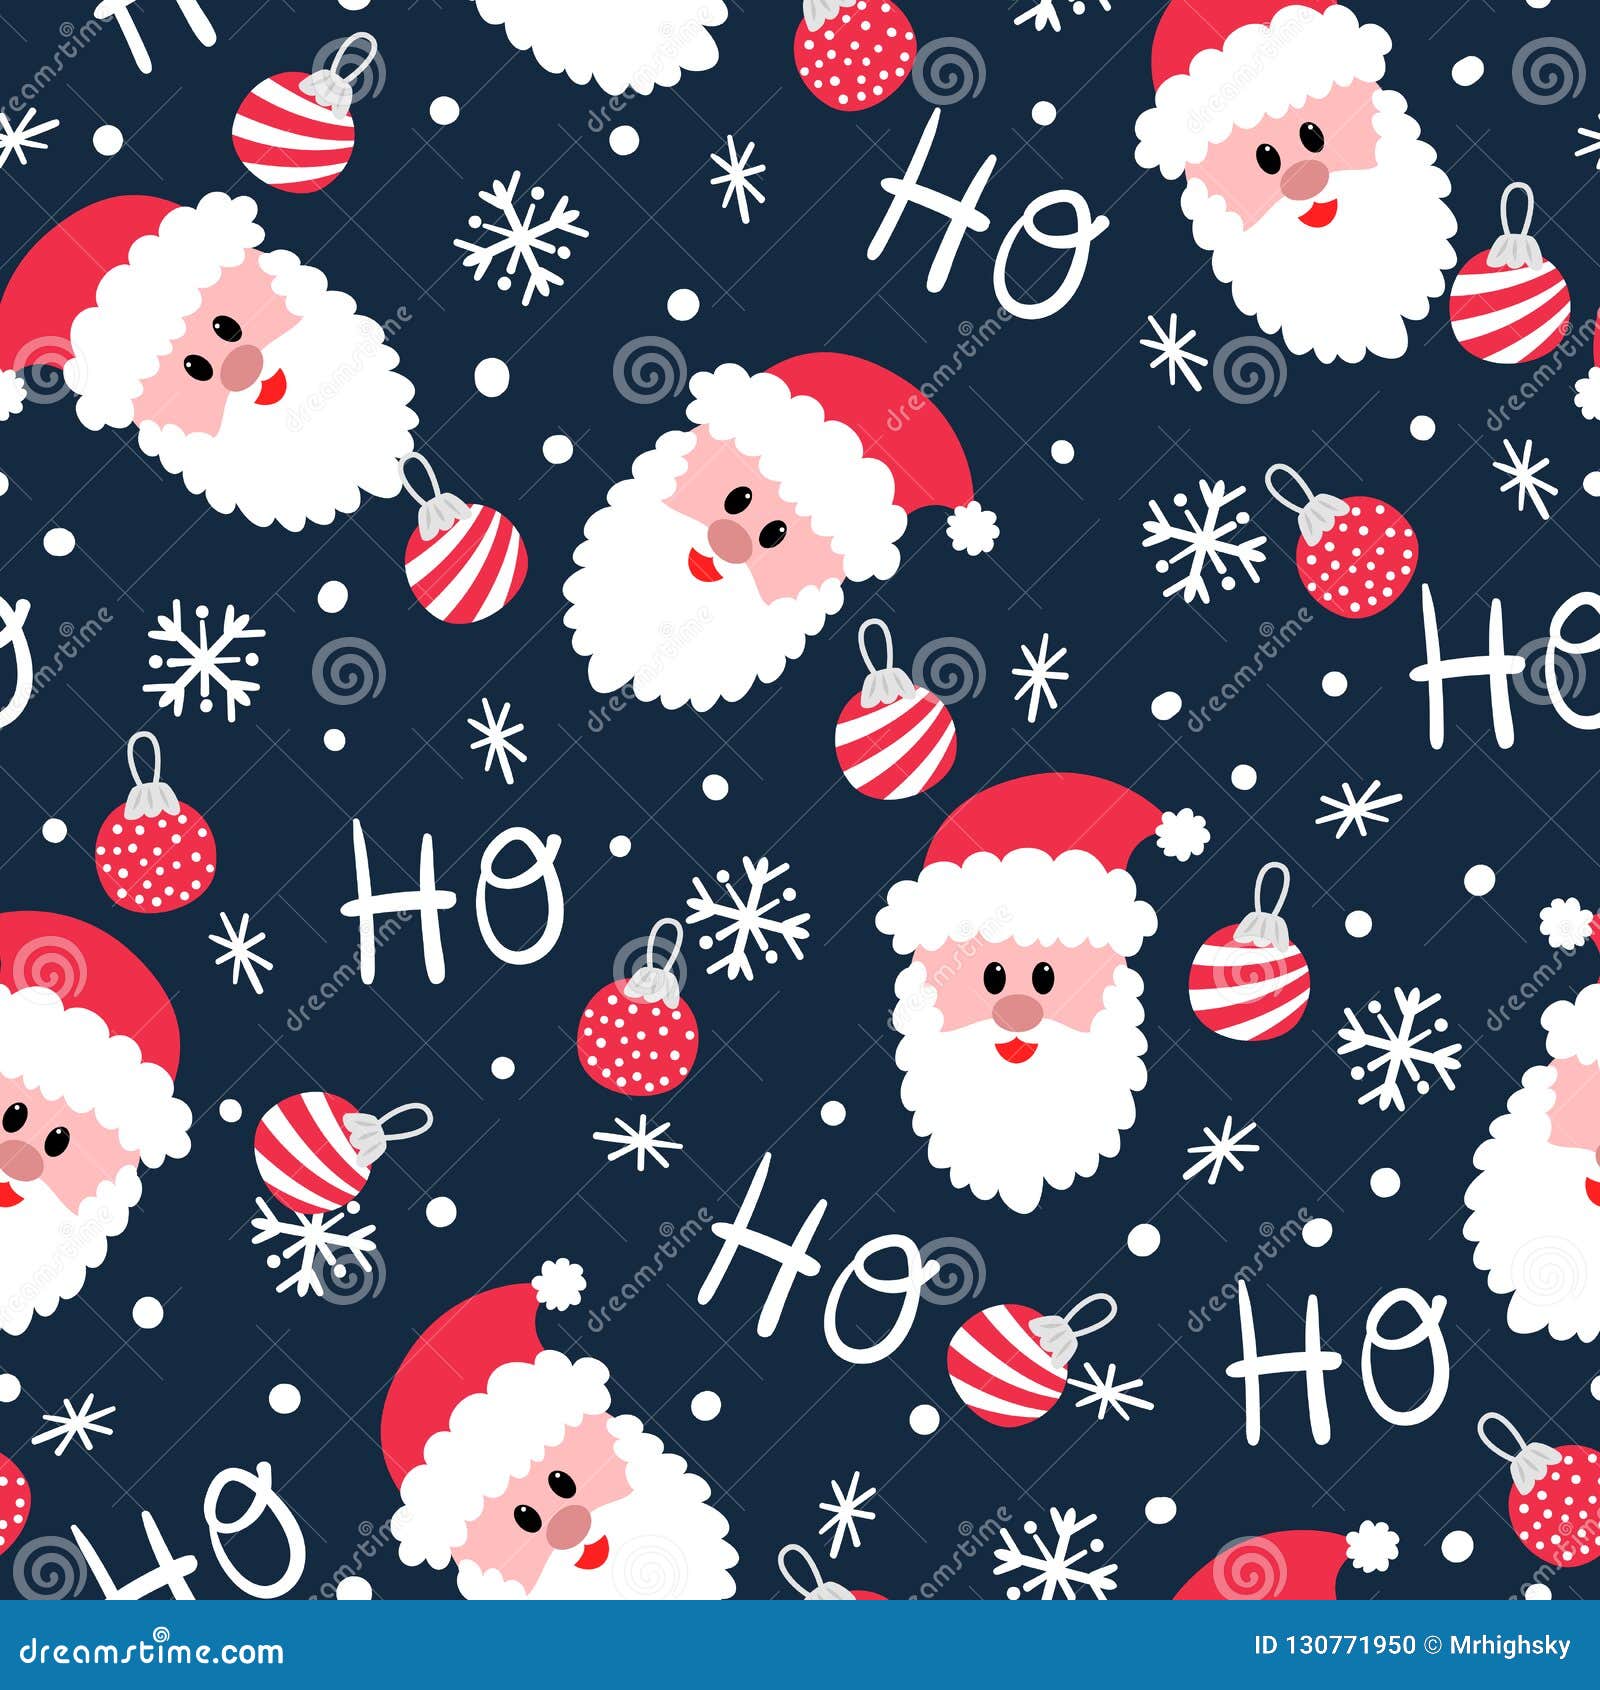 jolly santa ho ho ho christmas seamless pattern